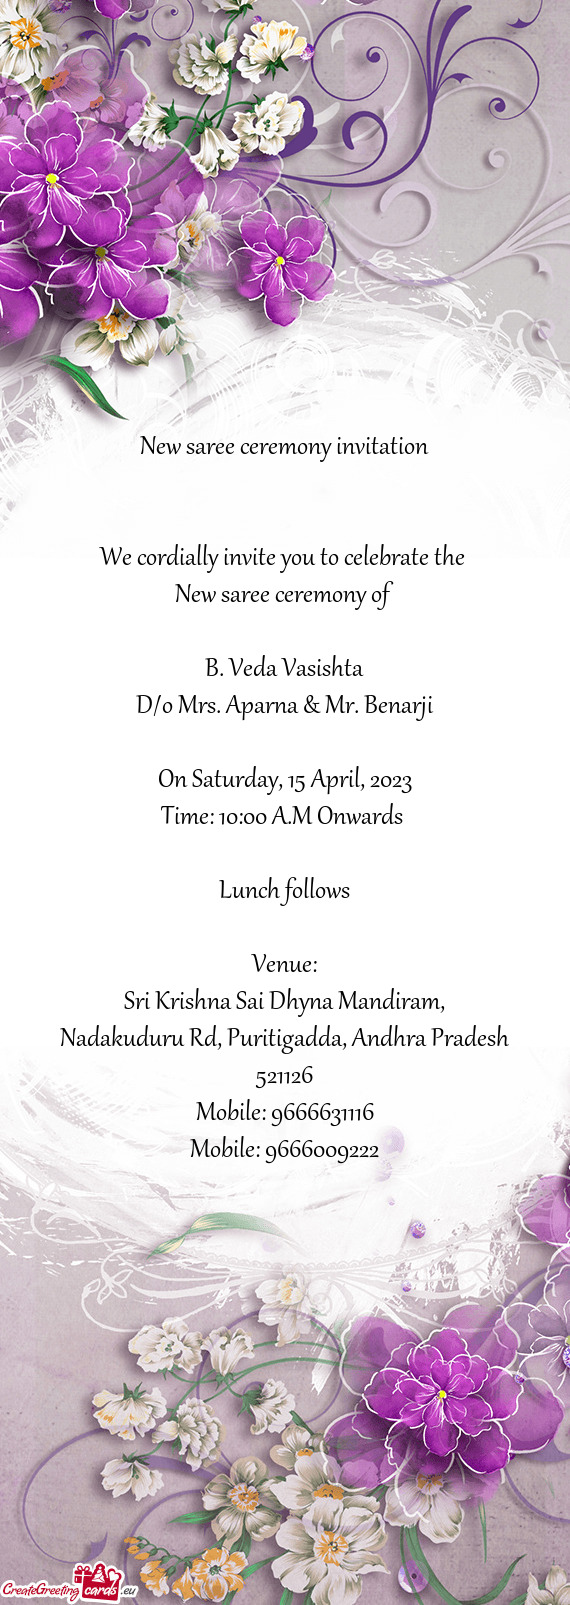 New saree ceremony invitation